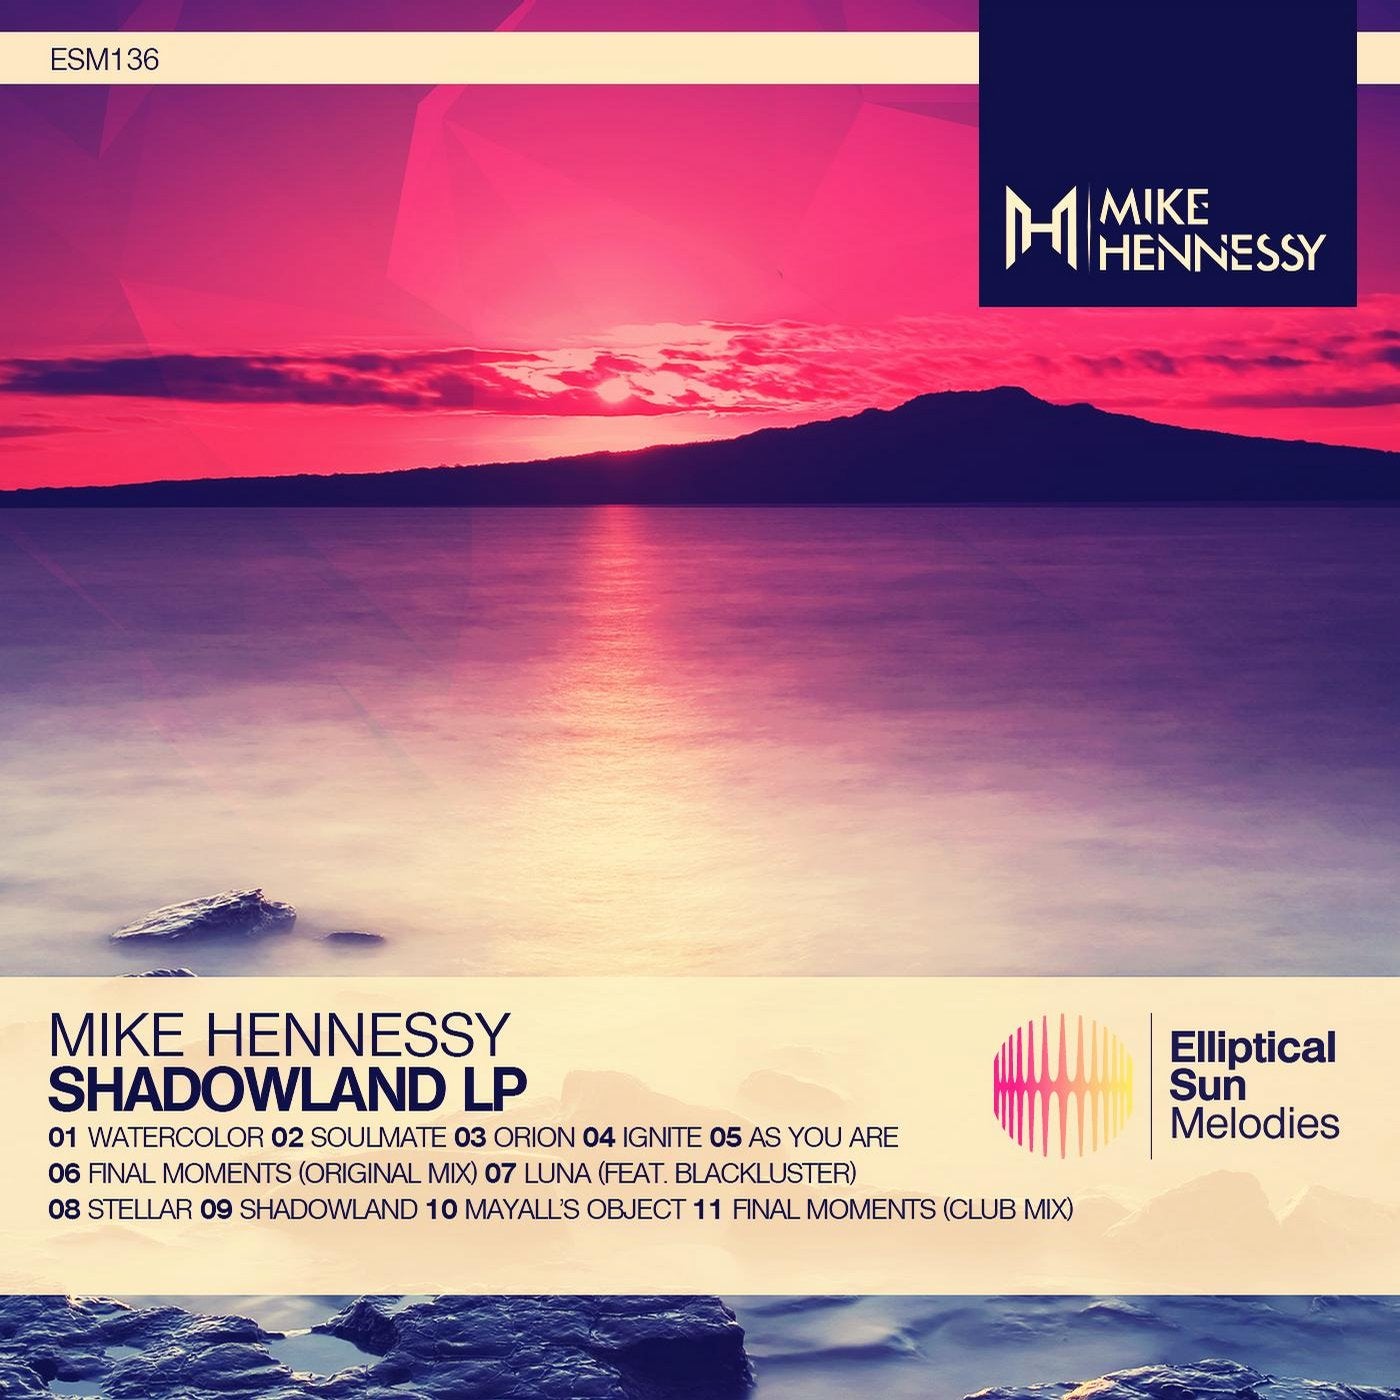 Shadowland LP